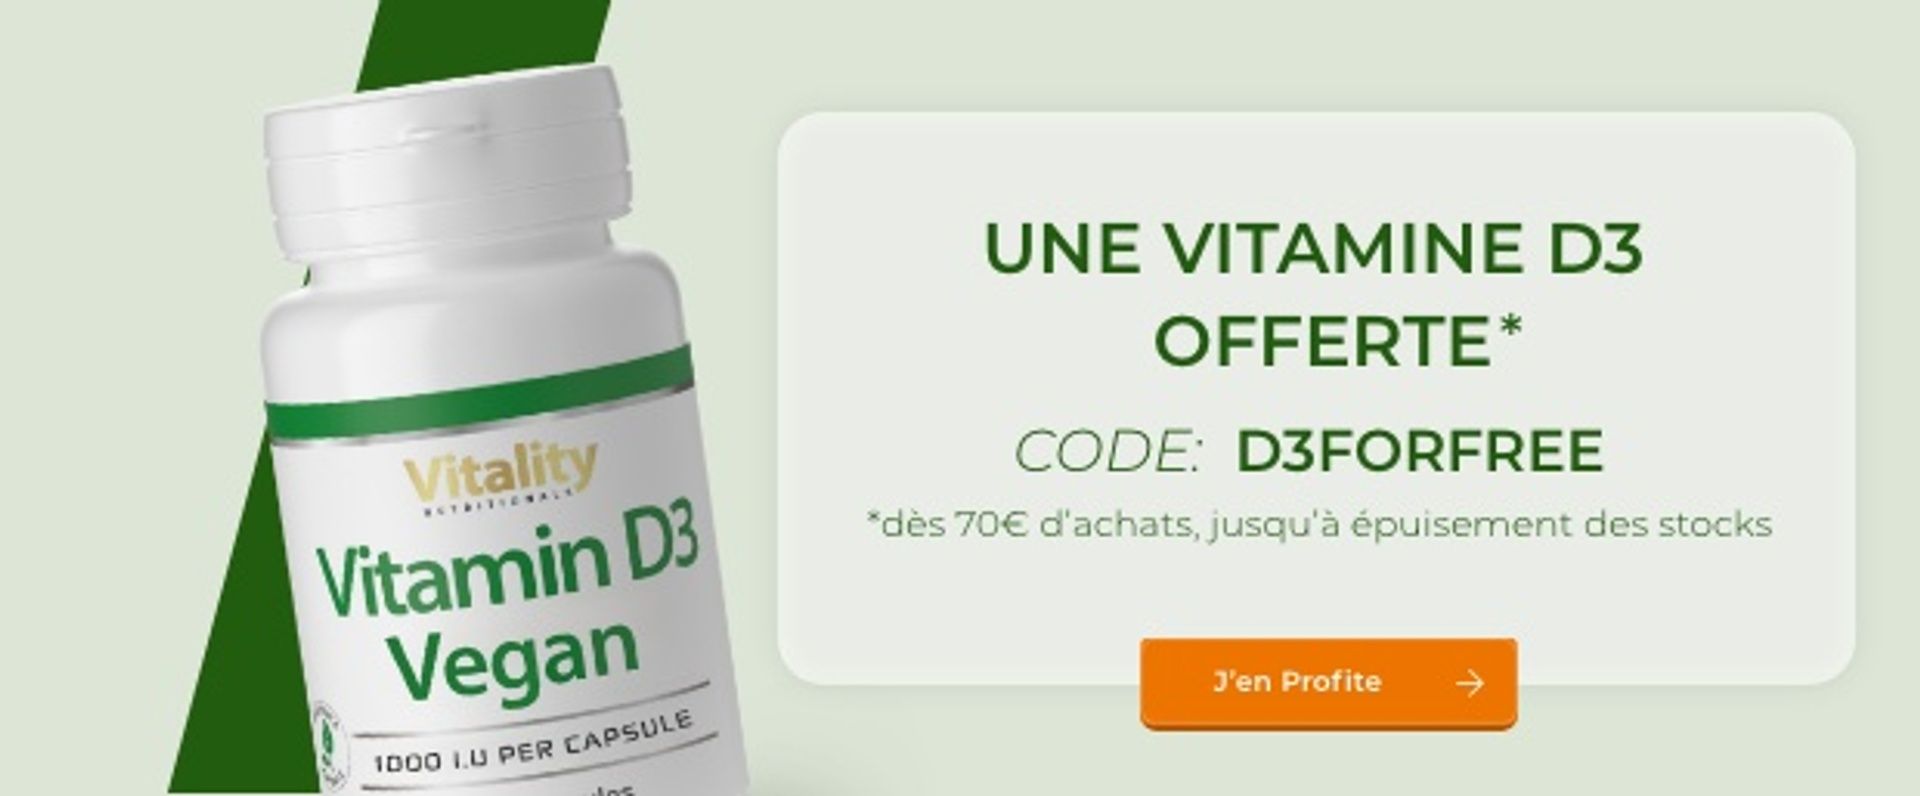 VE_GWP_Vitamin-D3_Vegan_1000_IE_620x257_FR.png